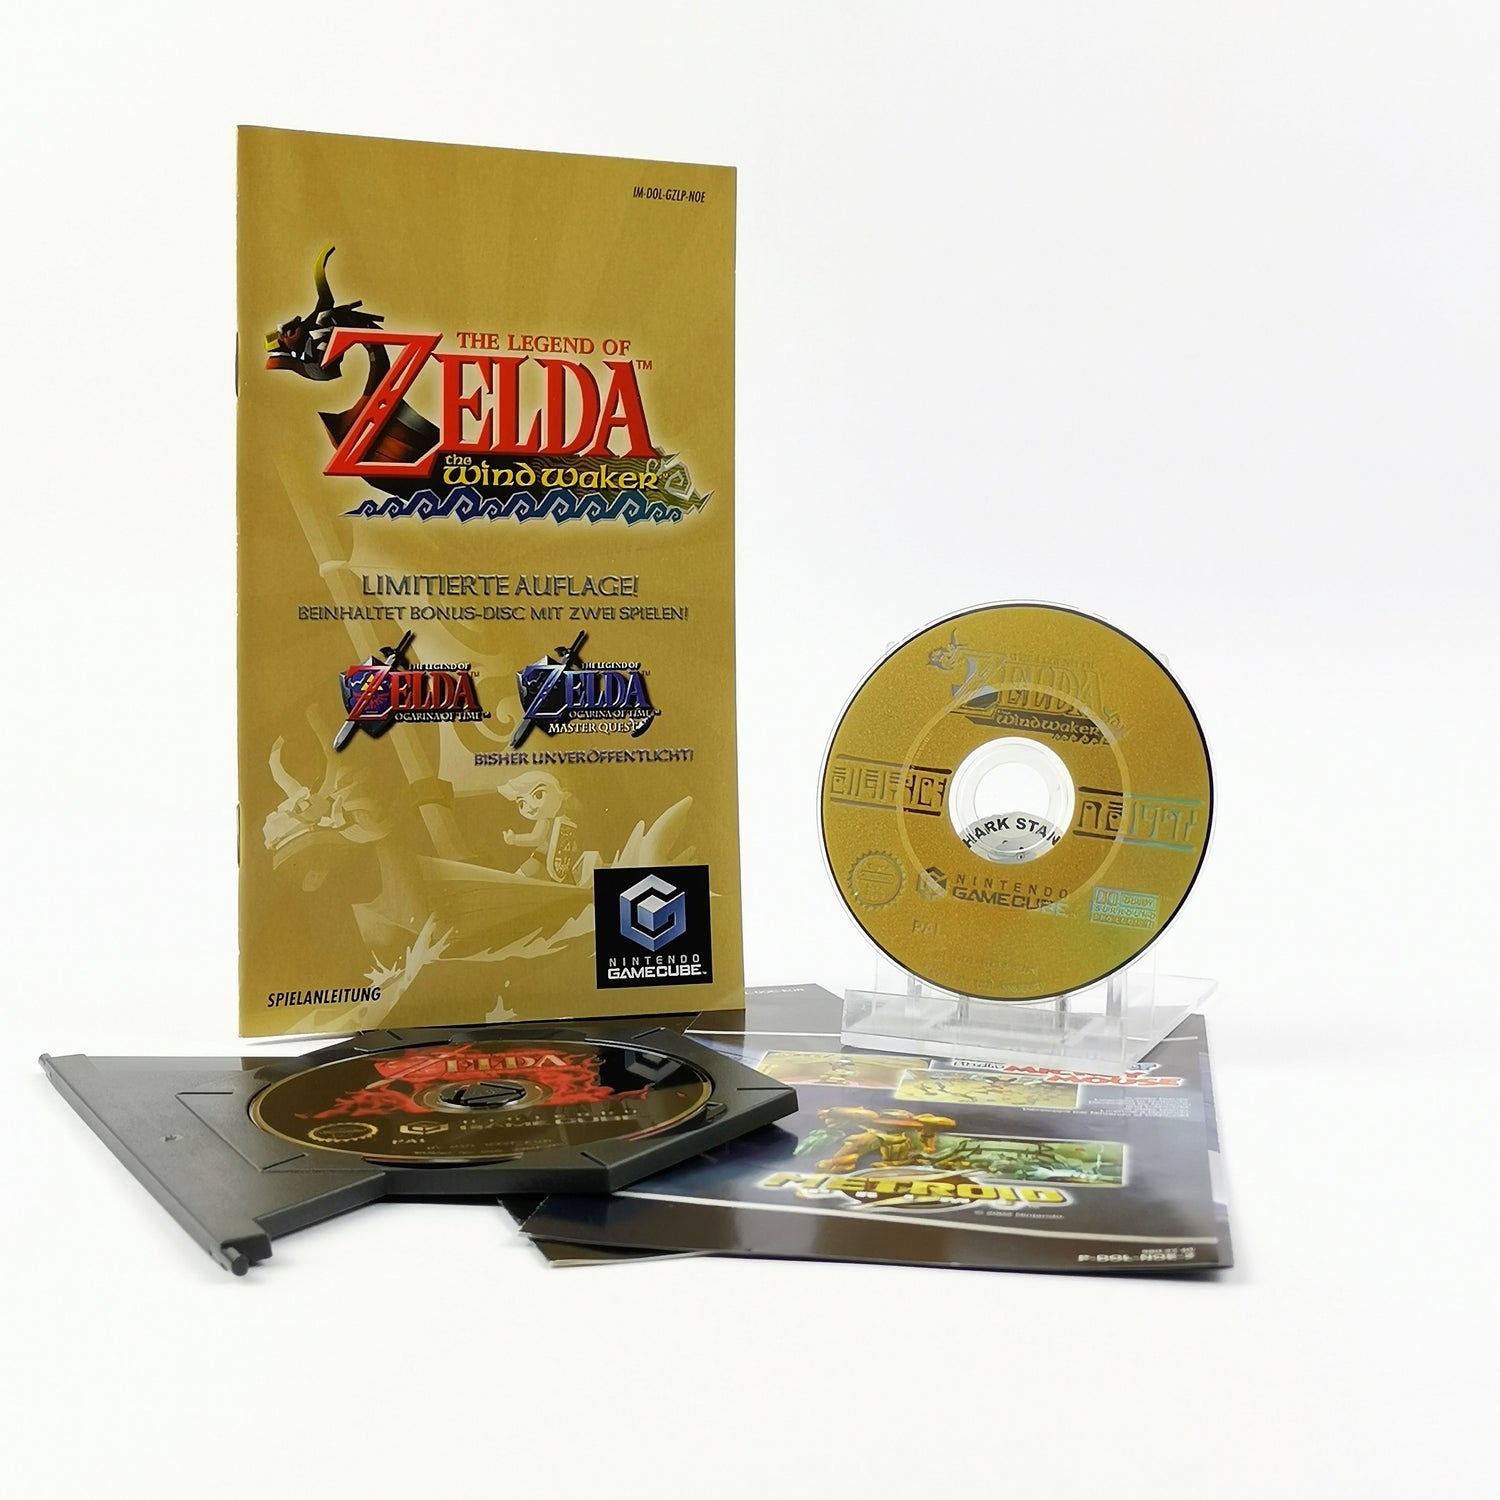 Nintendo Gamecube Game: Zelda The Windwaker Limited Edition - Without OVP PAL